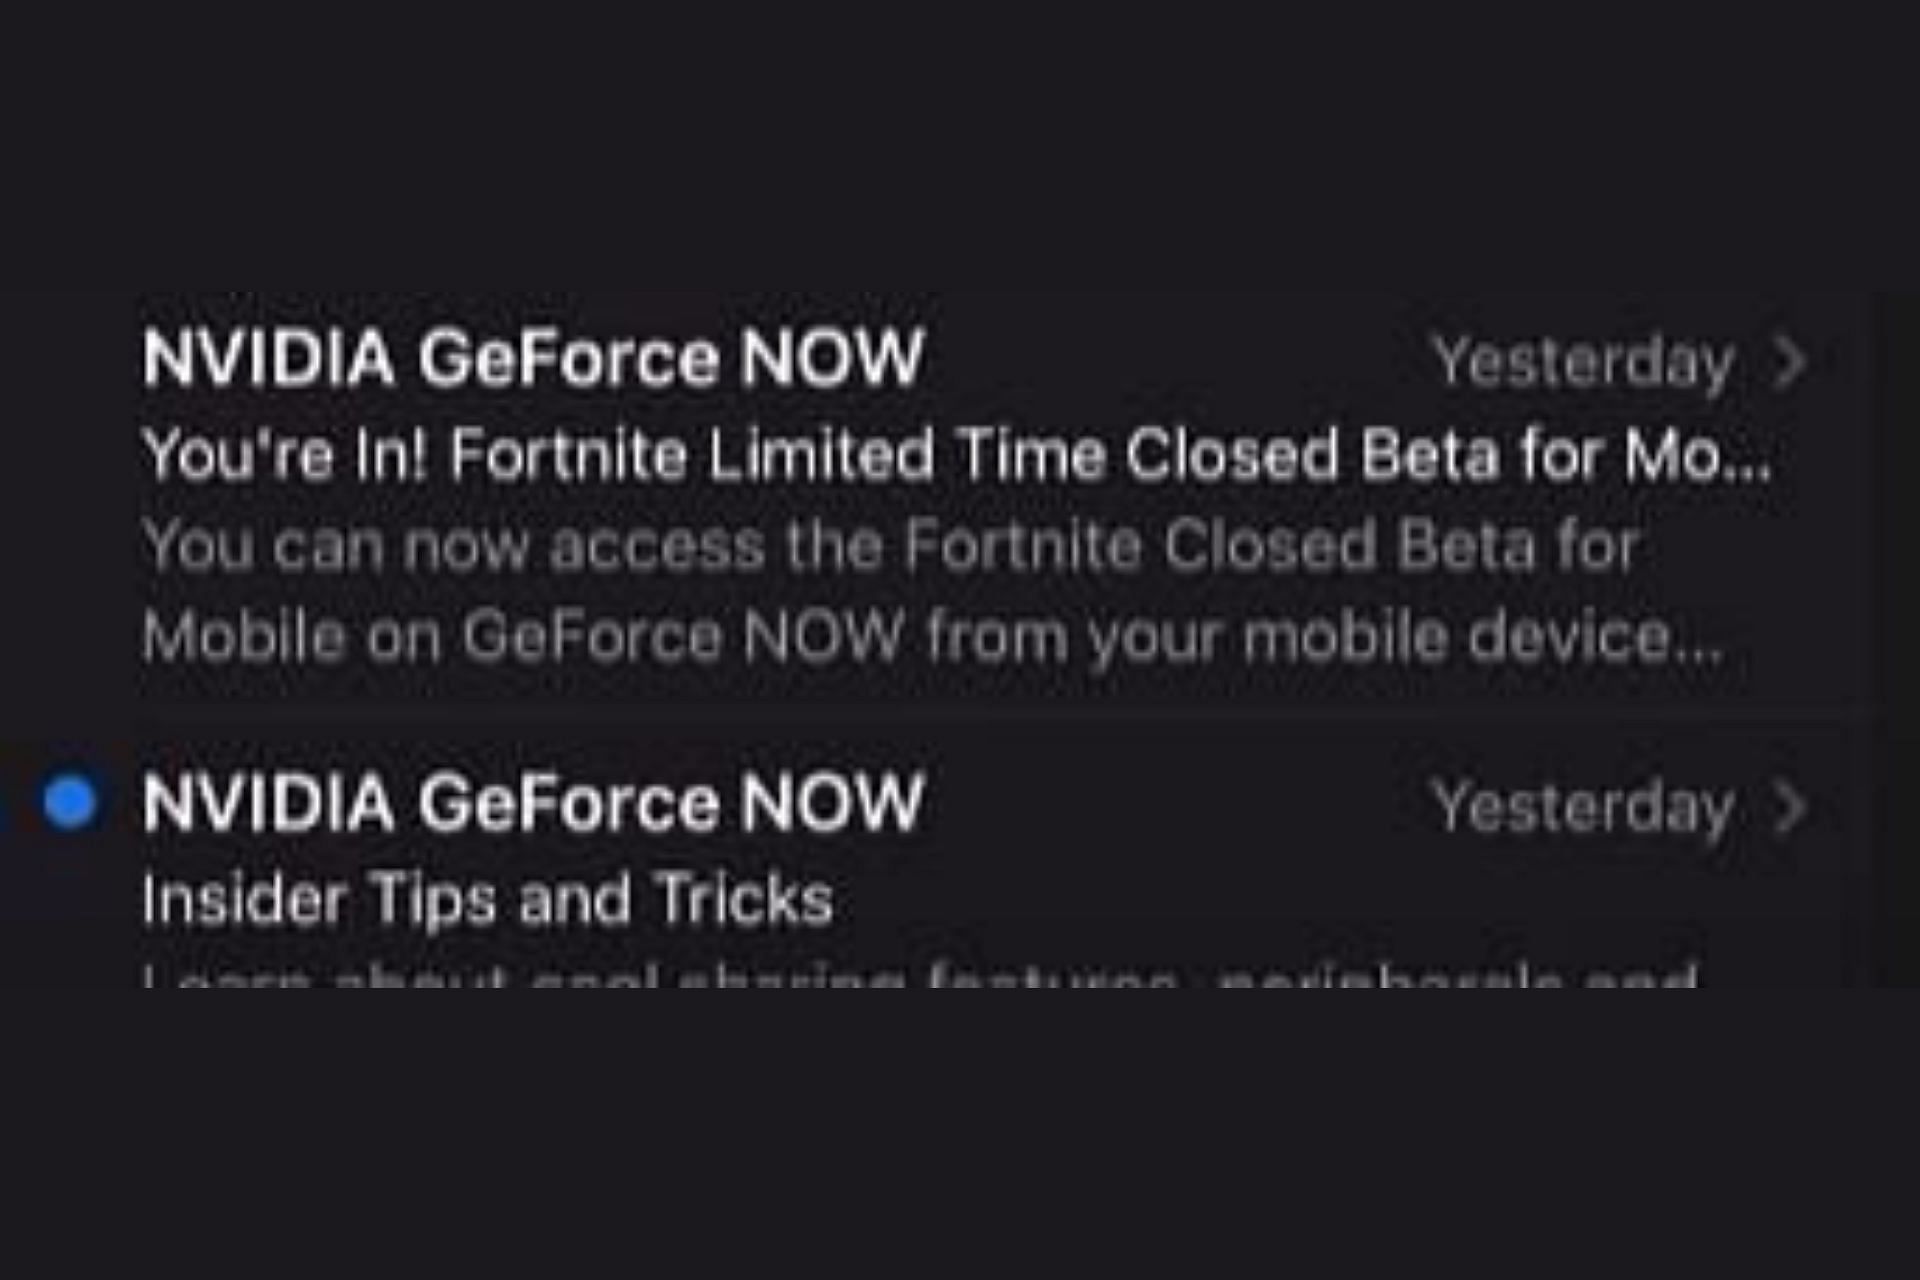 Fortnite's return to iOS via GeForce Now feels just fine - The Verge